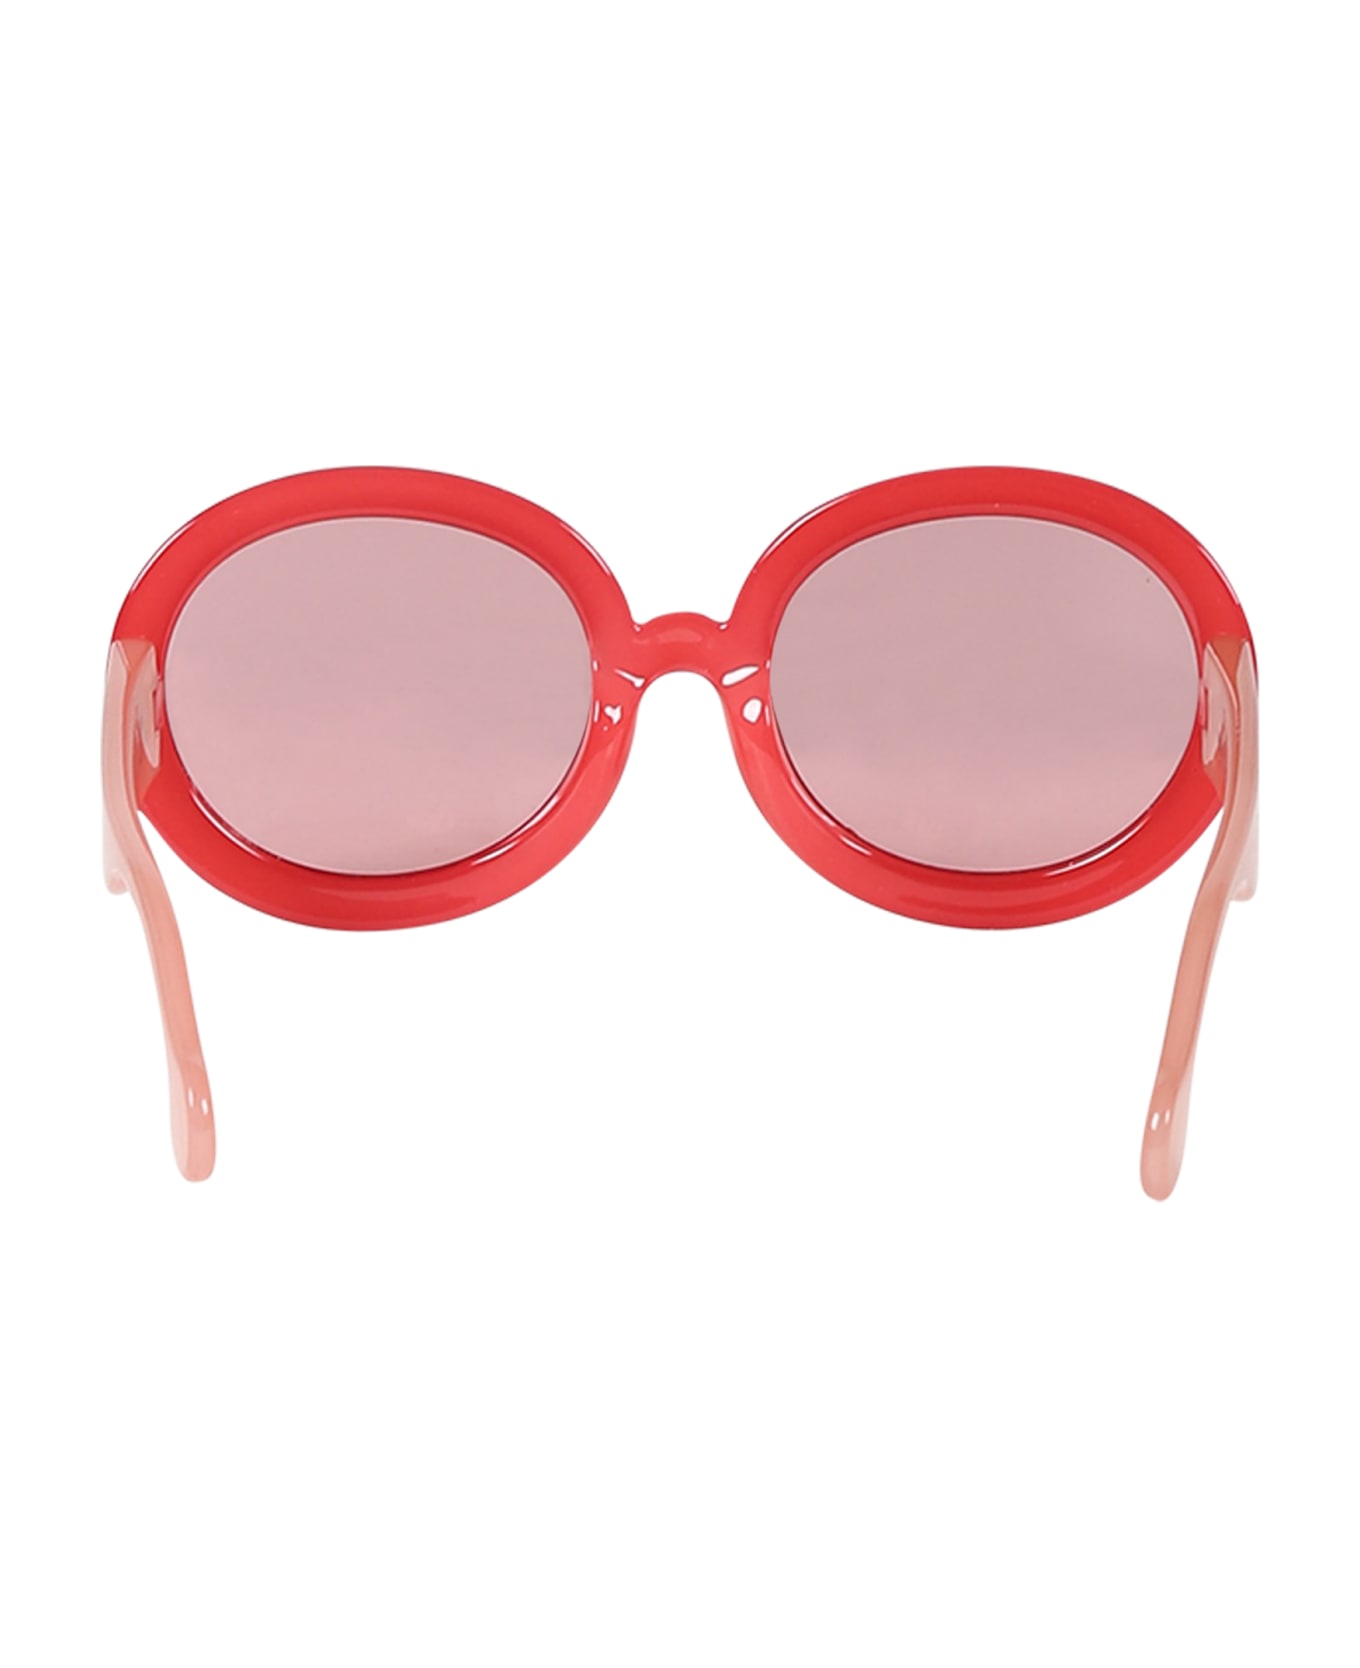 The Animals Observatory Fuchsia Sunglasses For Girl With Logo - Fuchsia